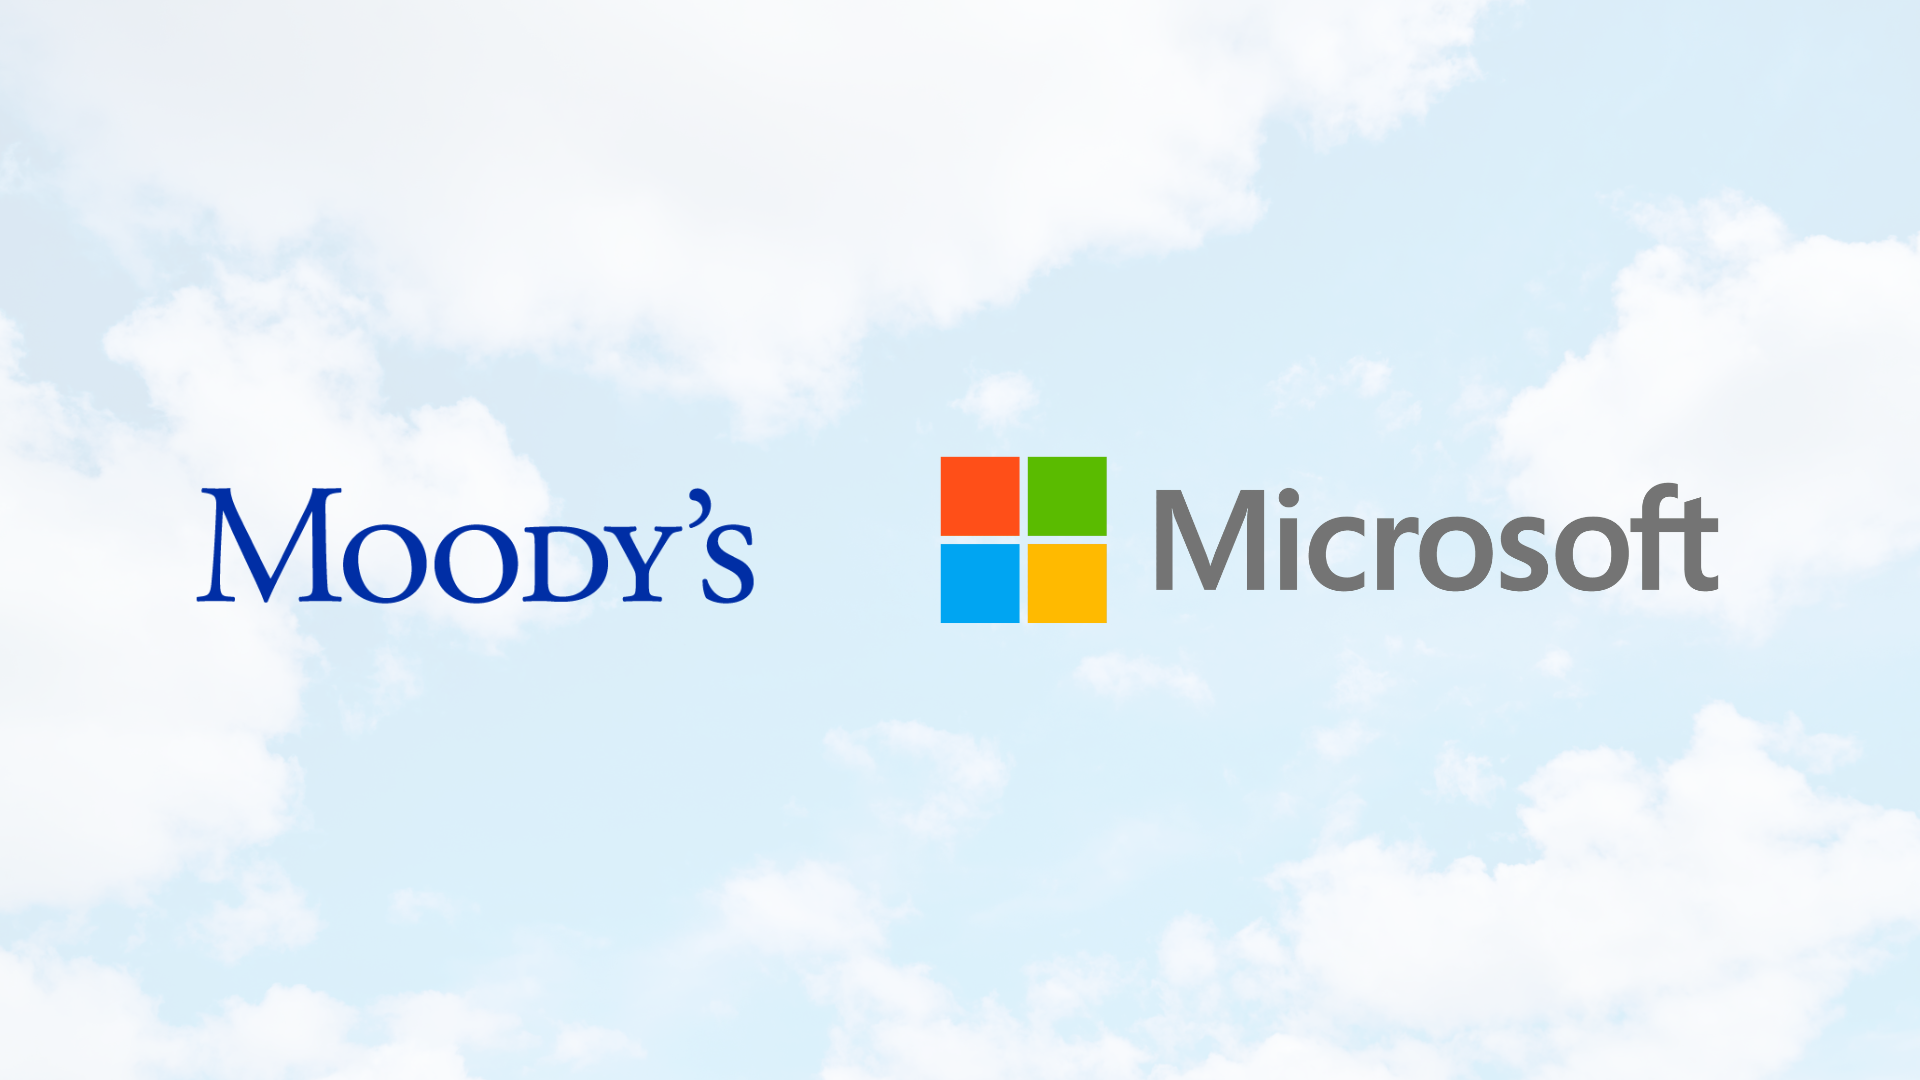 Moody's and Microsoft logos